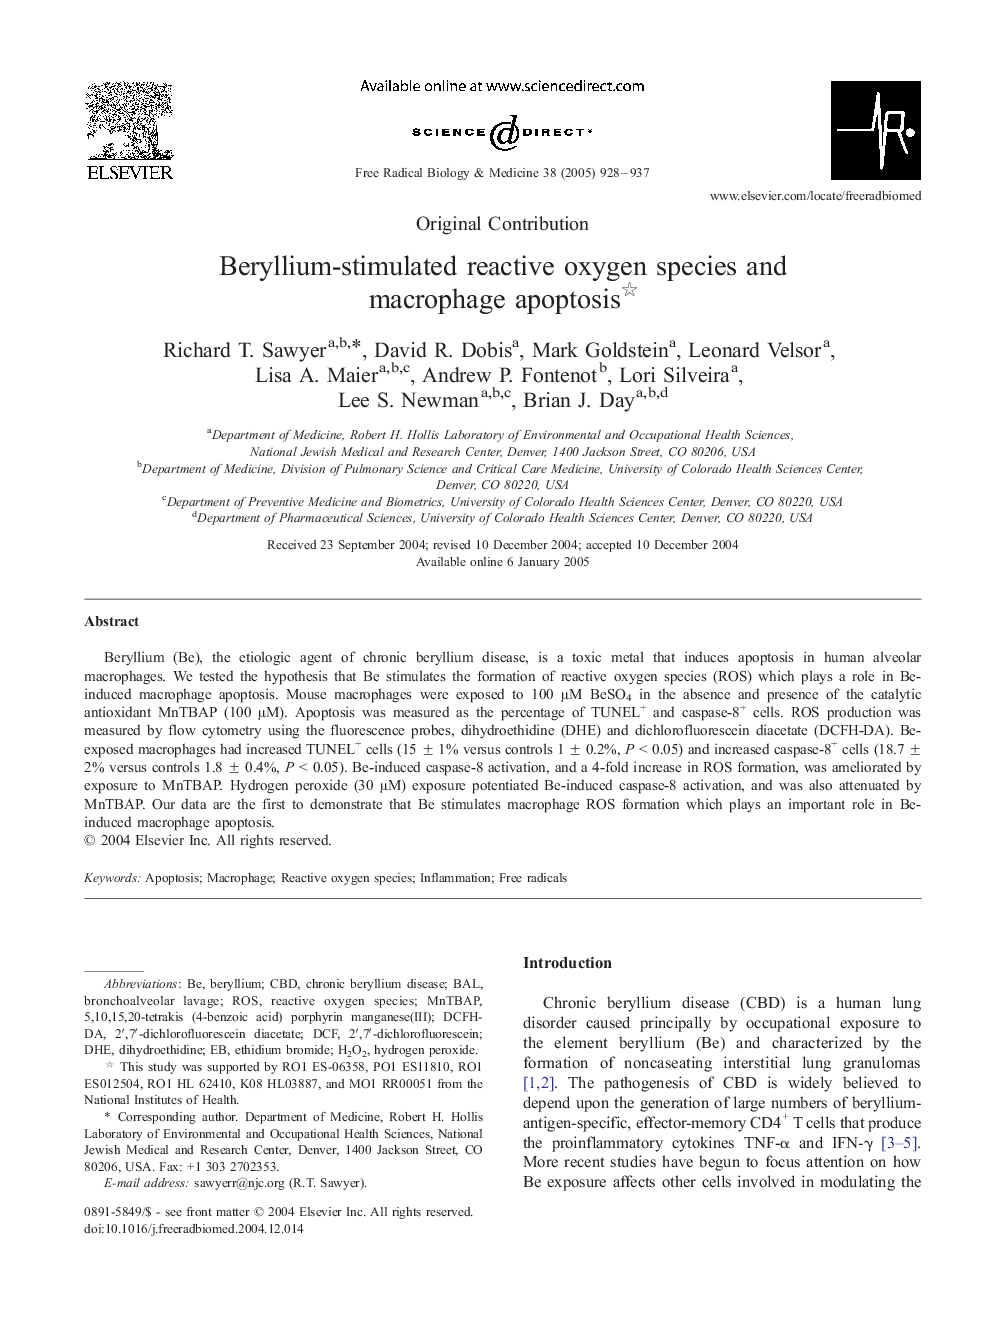 Beryllium-stimulated reactive oxygen species and macrophage apoptosis